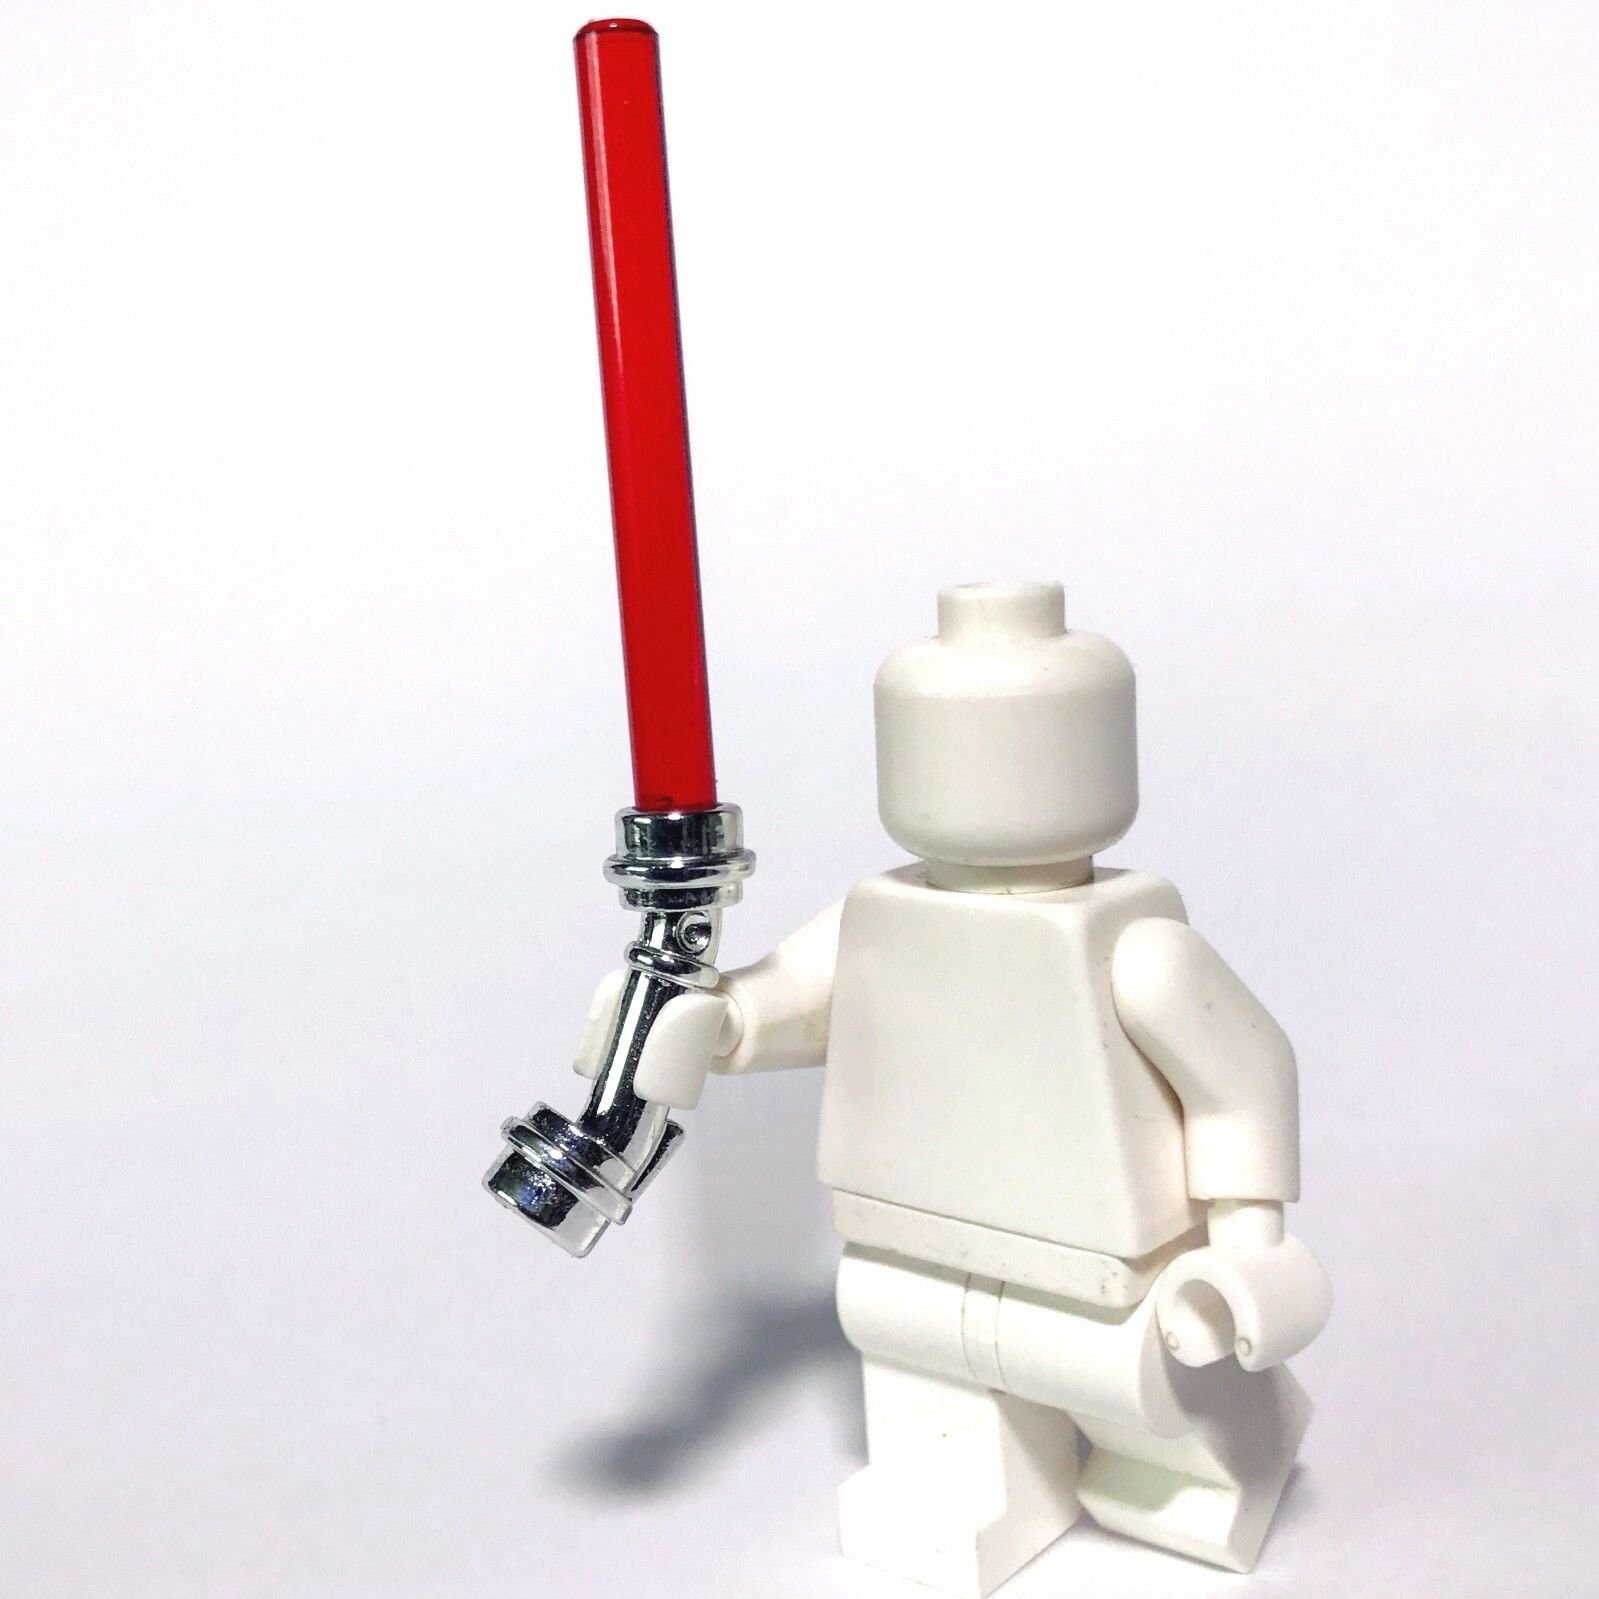 1 x Star Wars LEGO Count Dooku's Red Lightsaber Hilt Sith Part 7752 75017 7103 9515 - Bricks & Figures